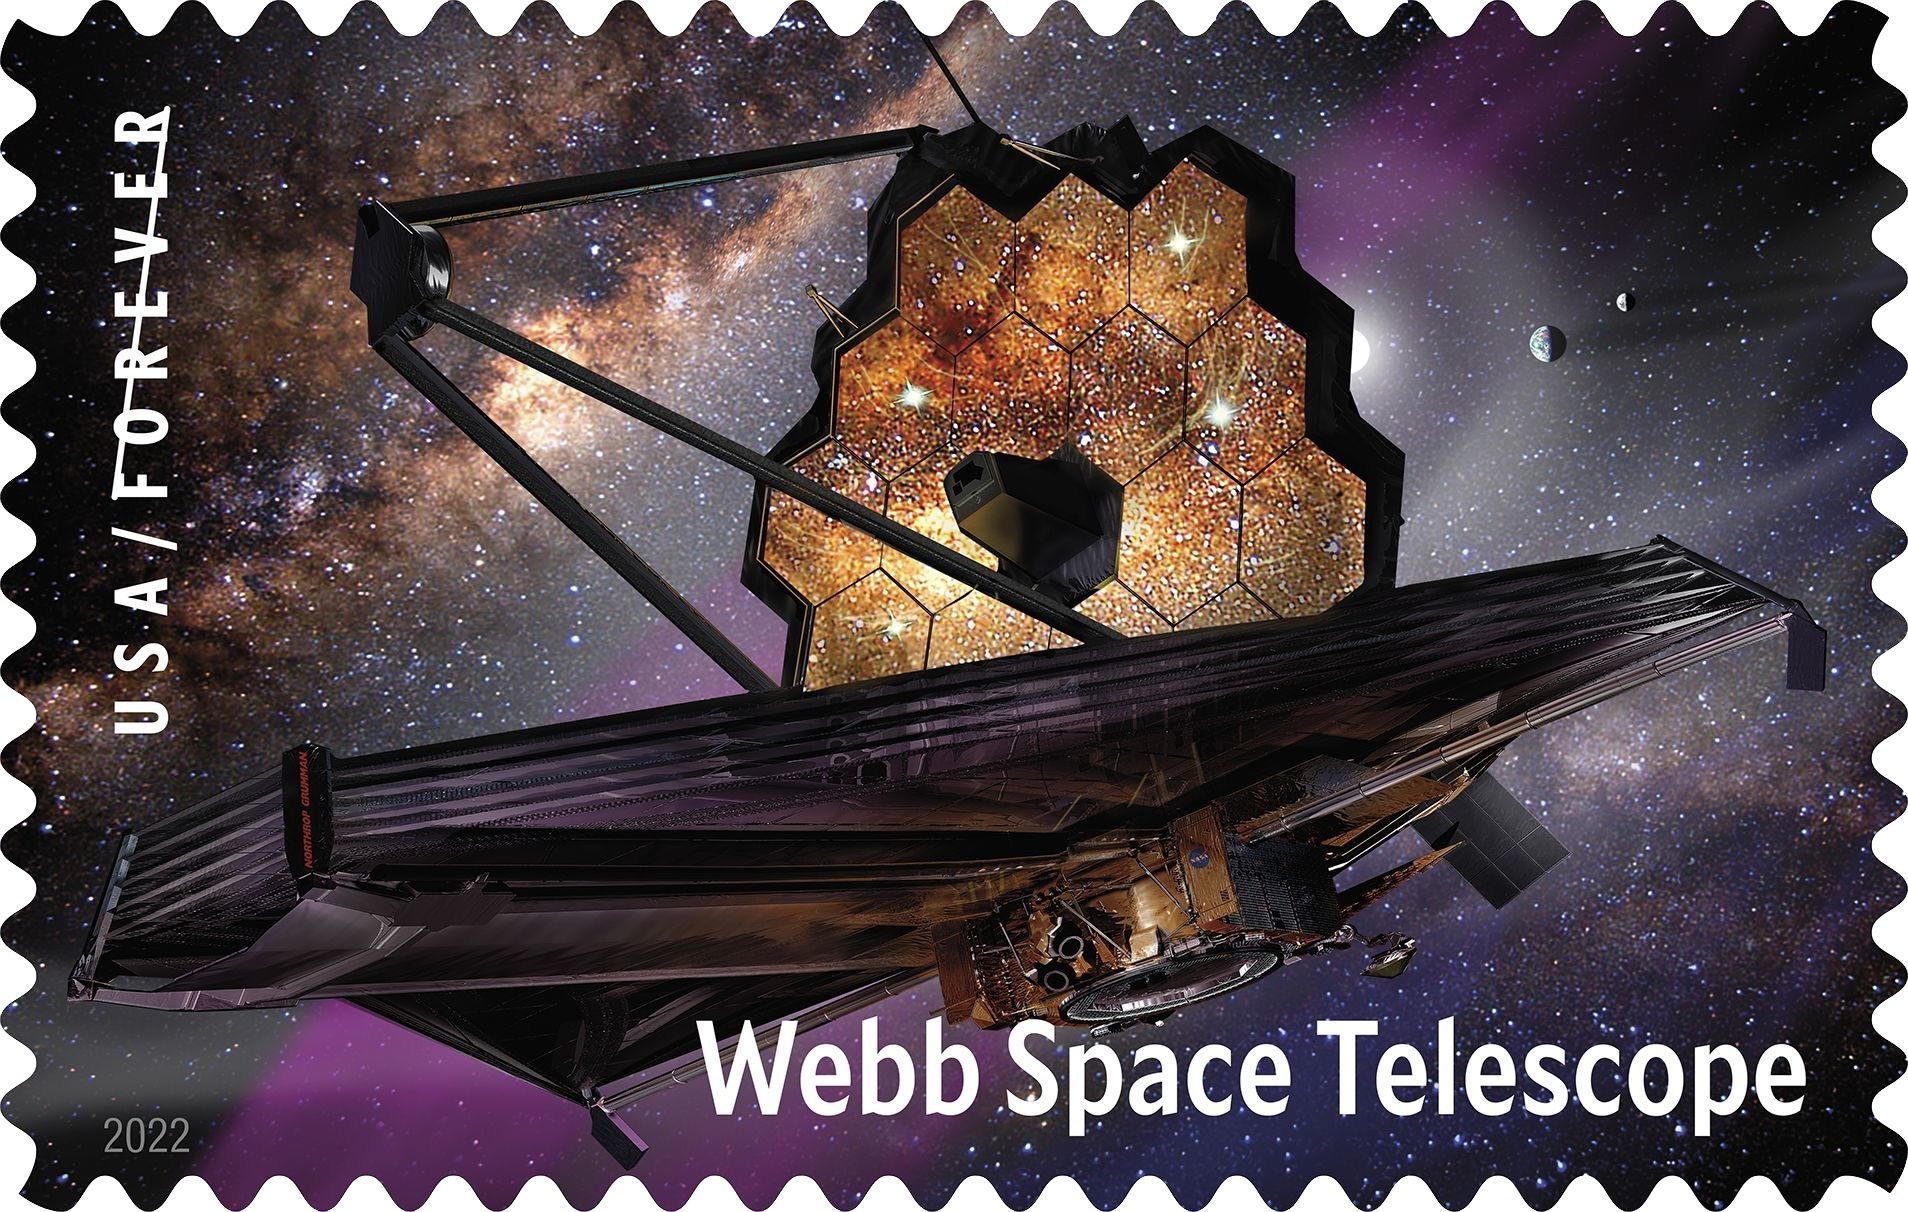 US Postal Service Celebrates NASA's Webb Telescope With New Stamp